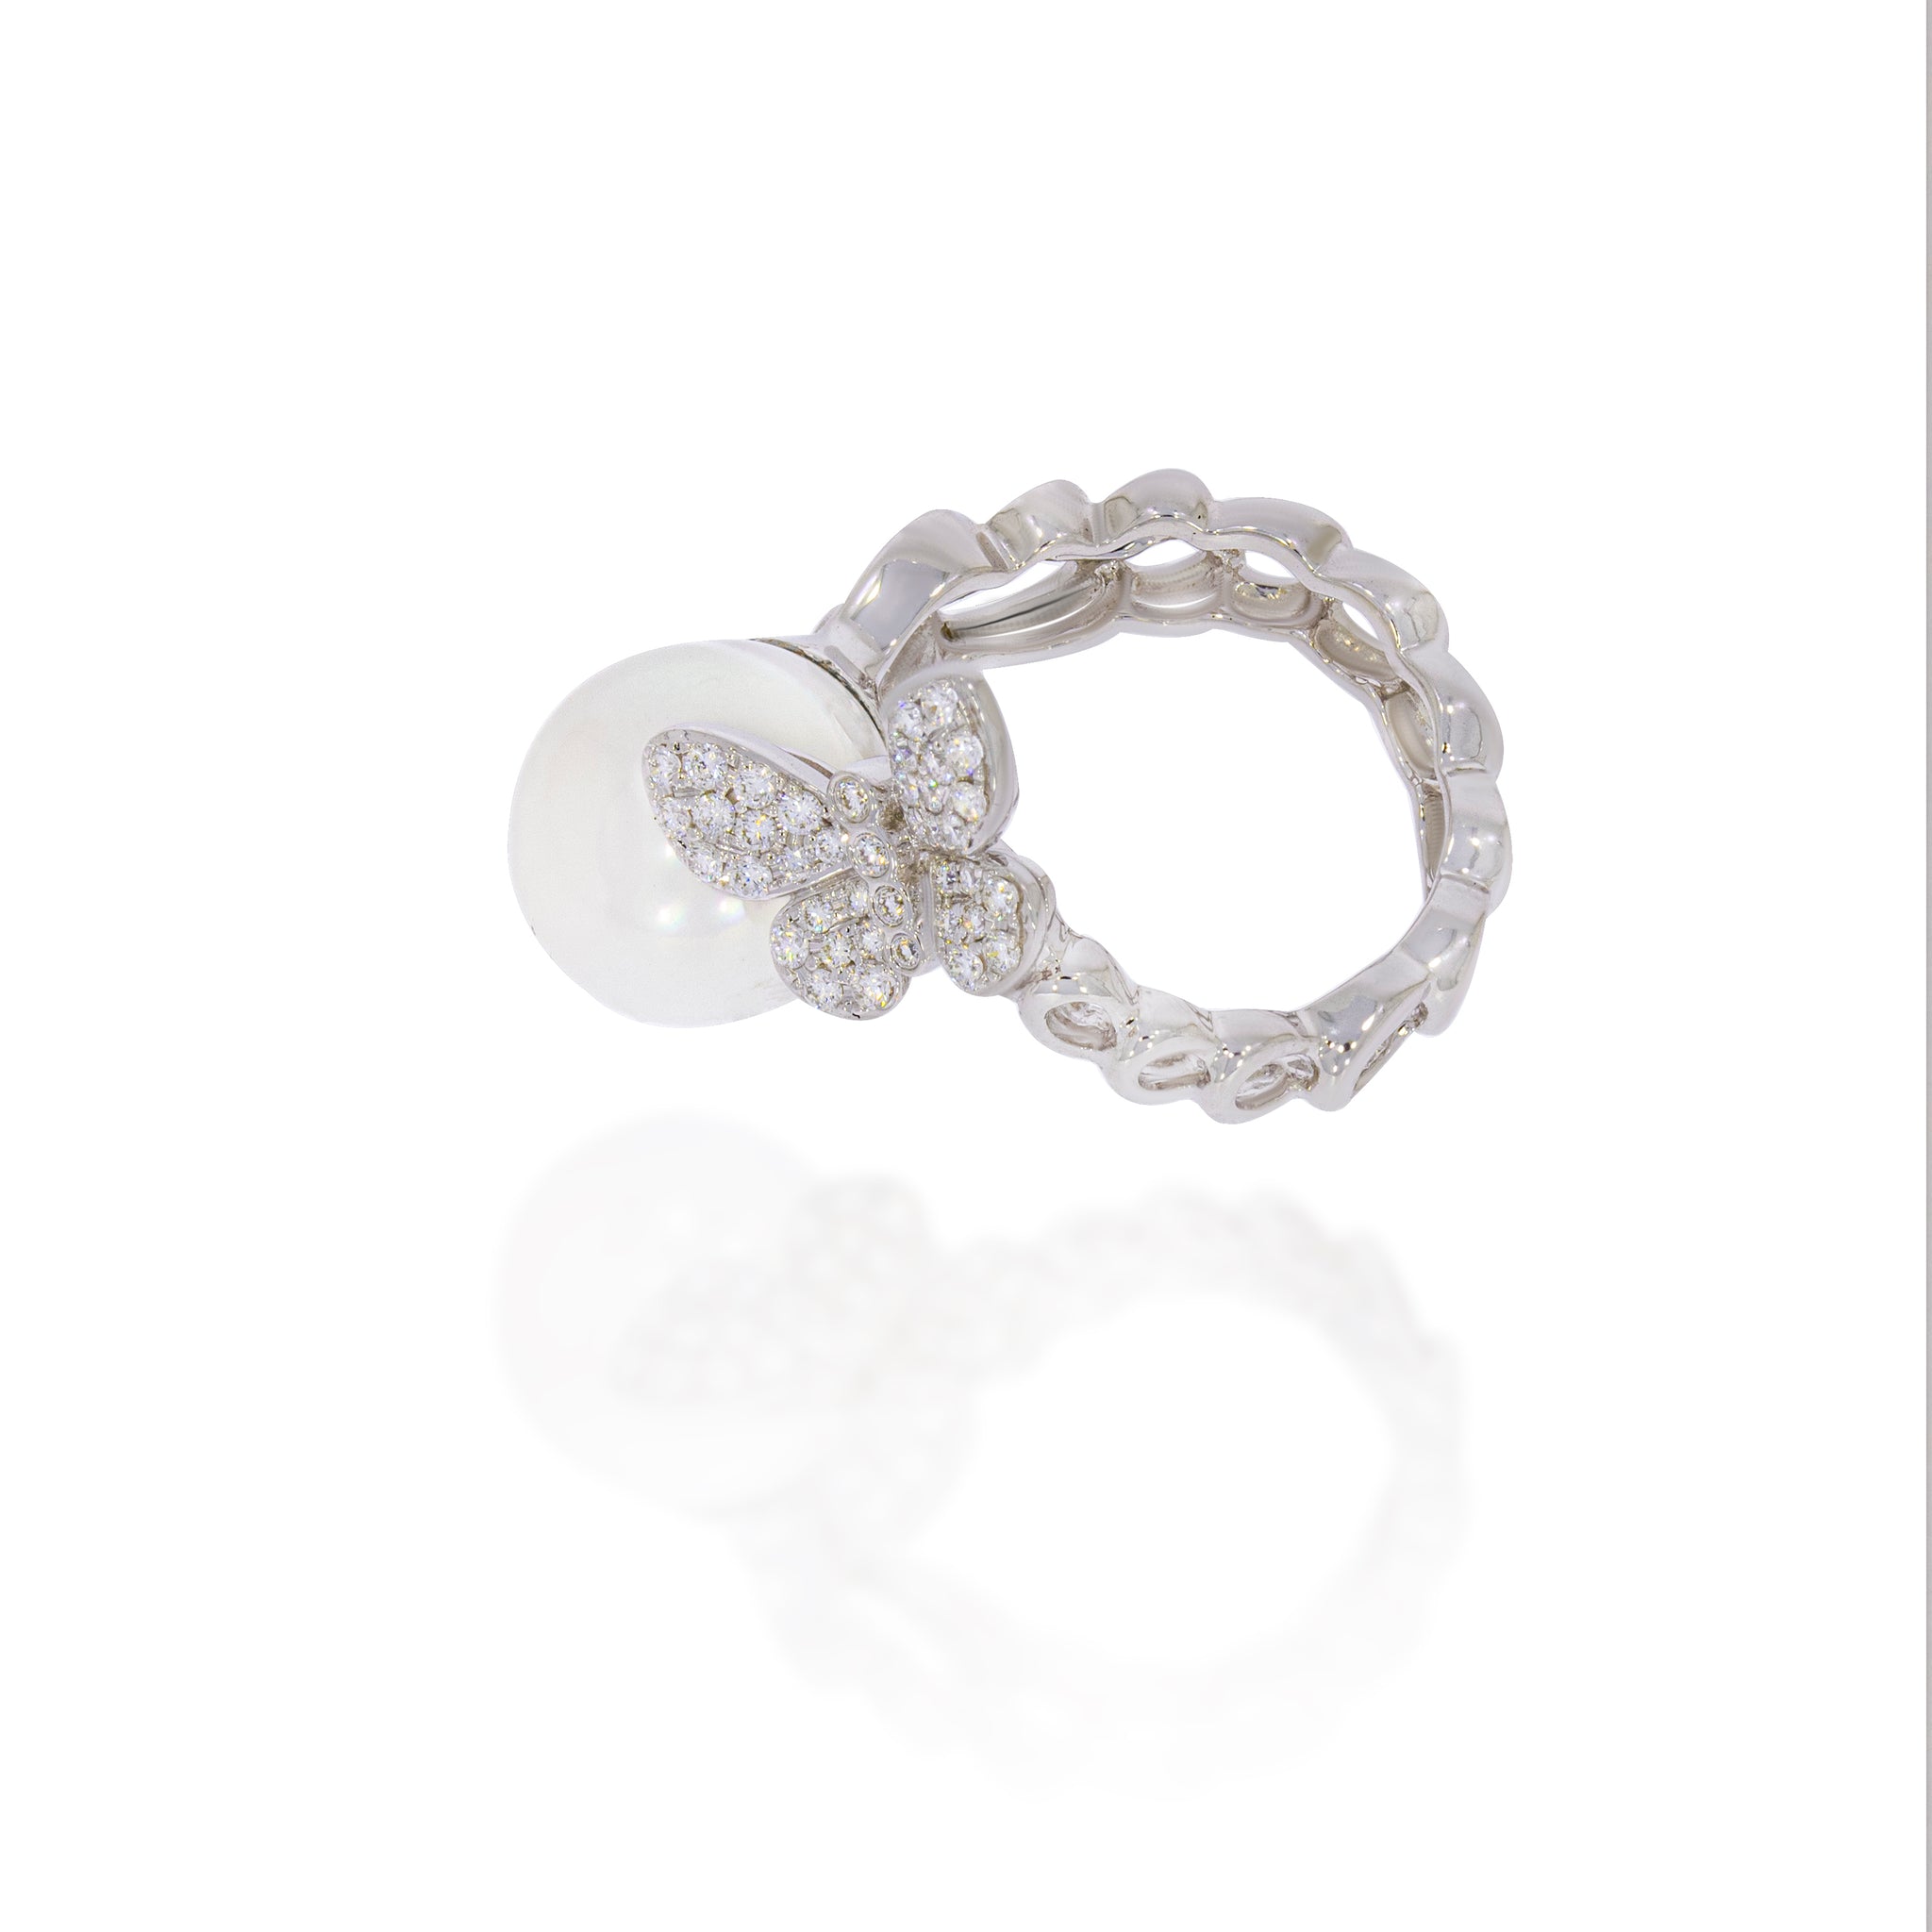 The most beautiful engagement rings - Lookrecya